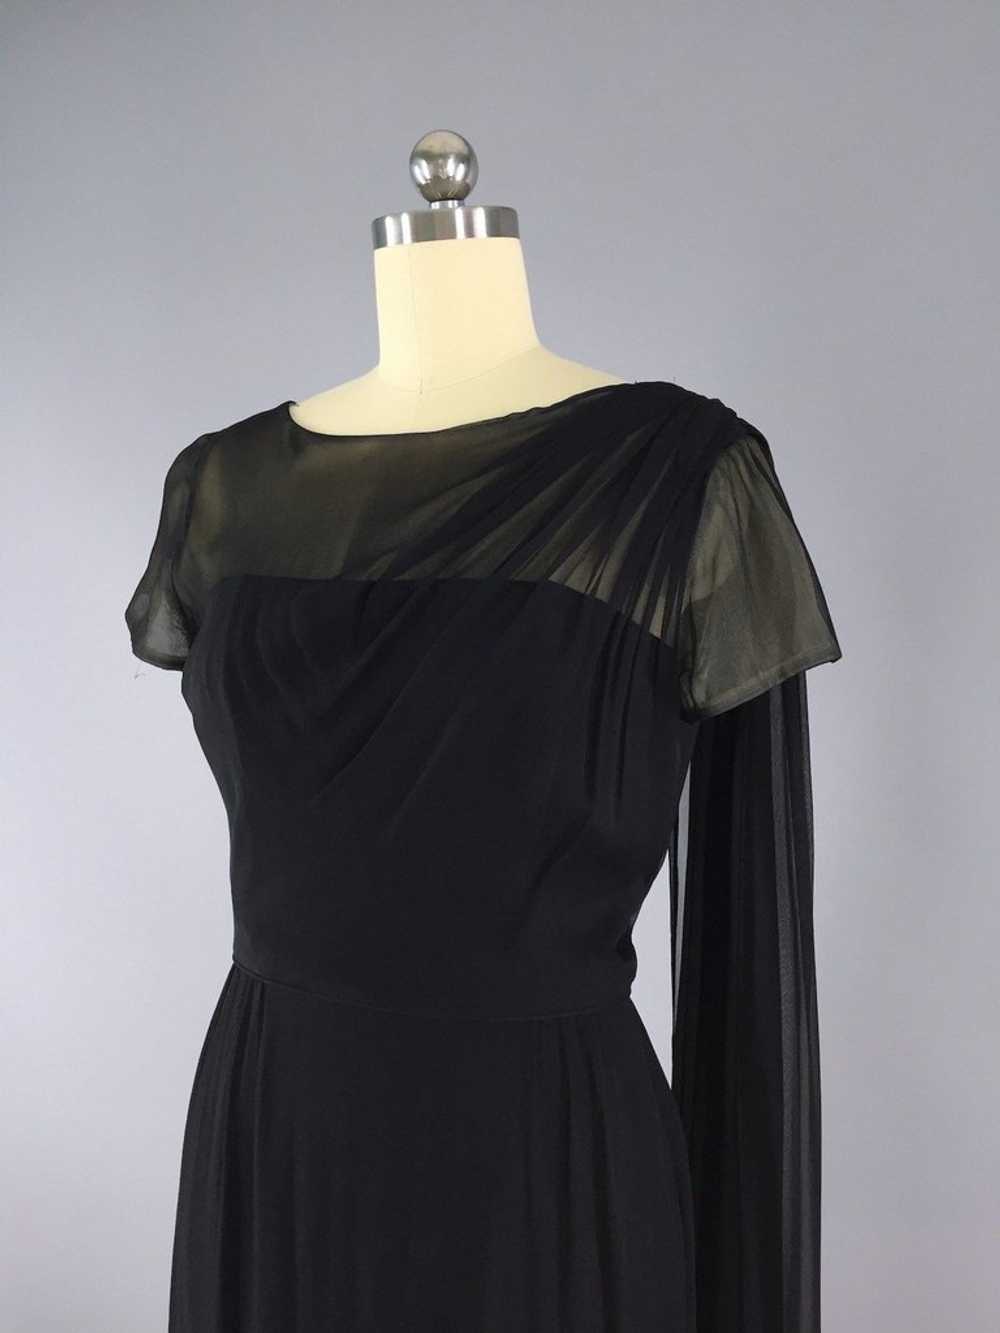 Vintage 1950s Black Chiffon Illusion Silk Dress - image 2